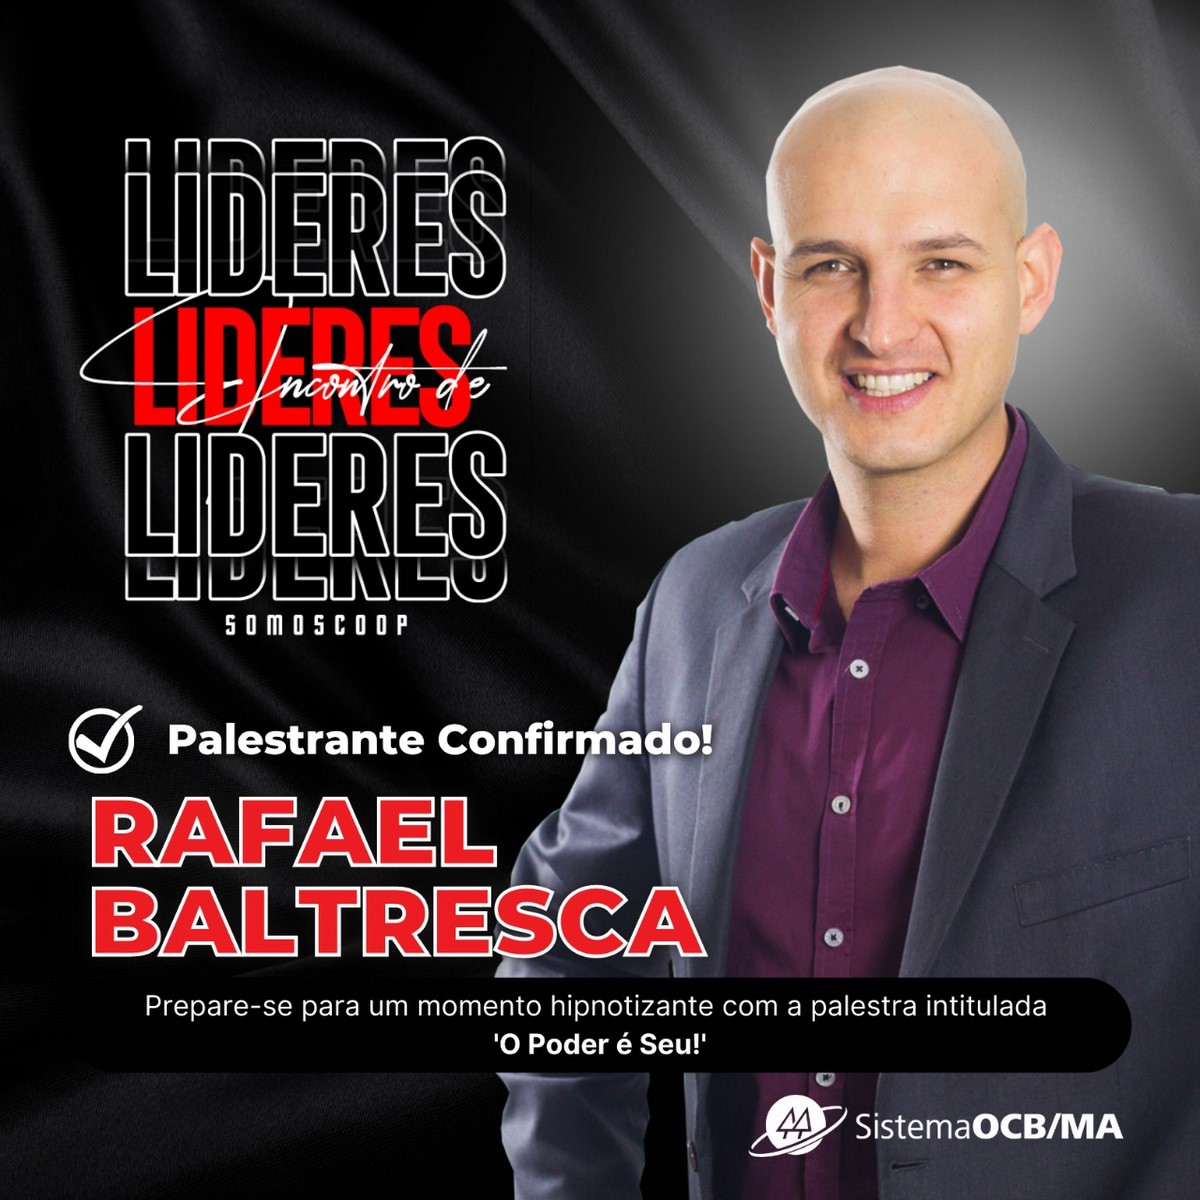 Rafael-Baltresca-Palestra-Secoop- (2)